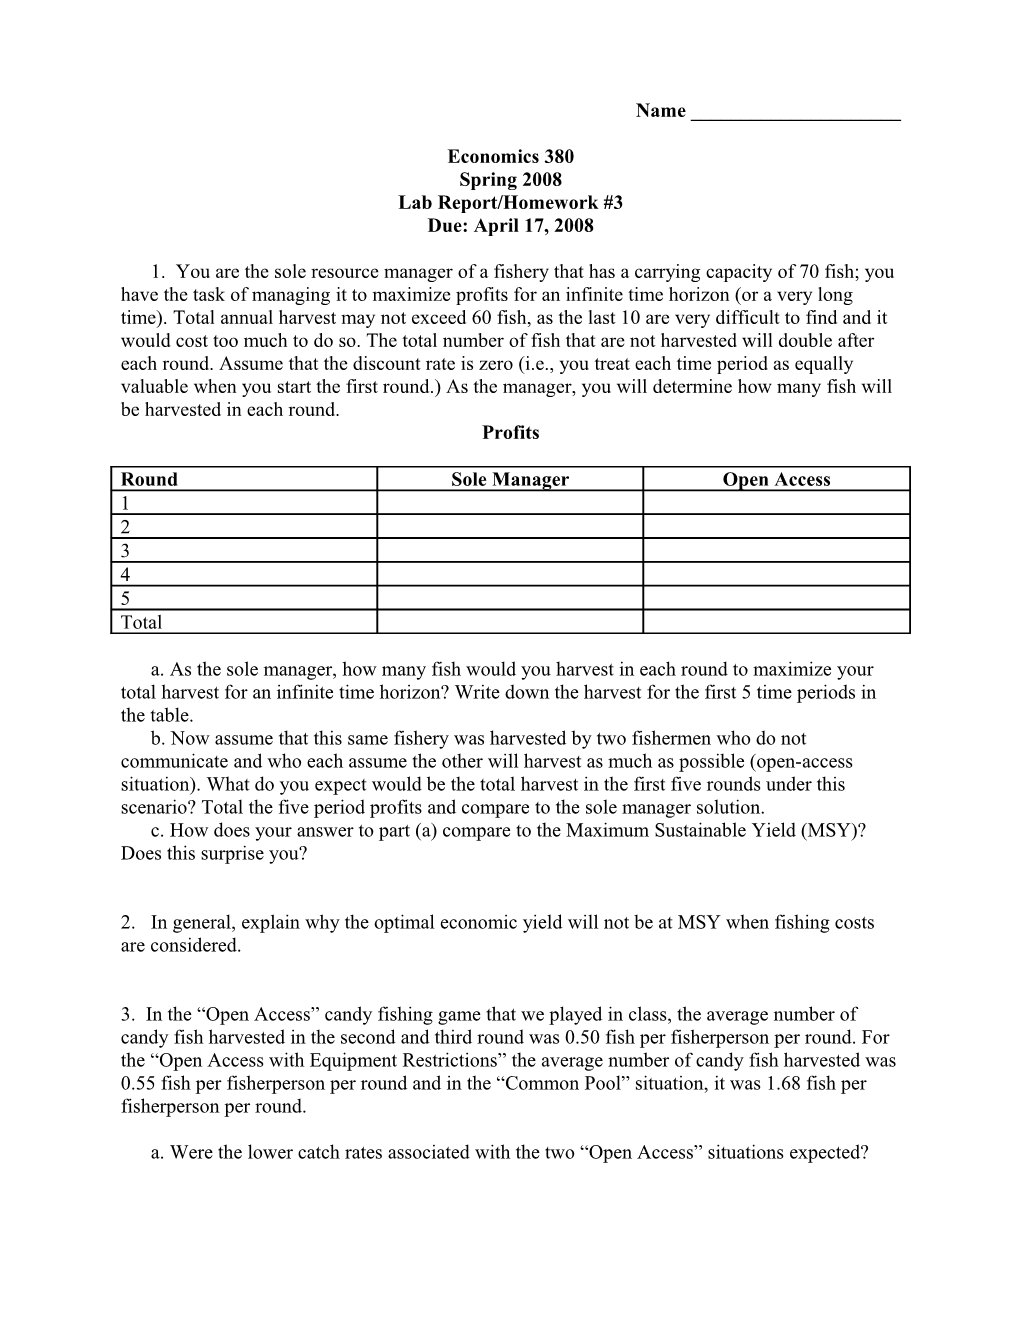 Lab Report/Homework #3